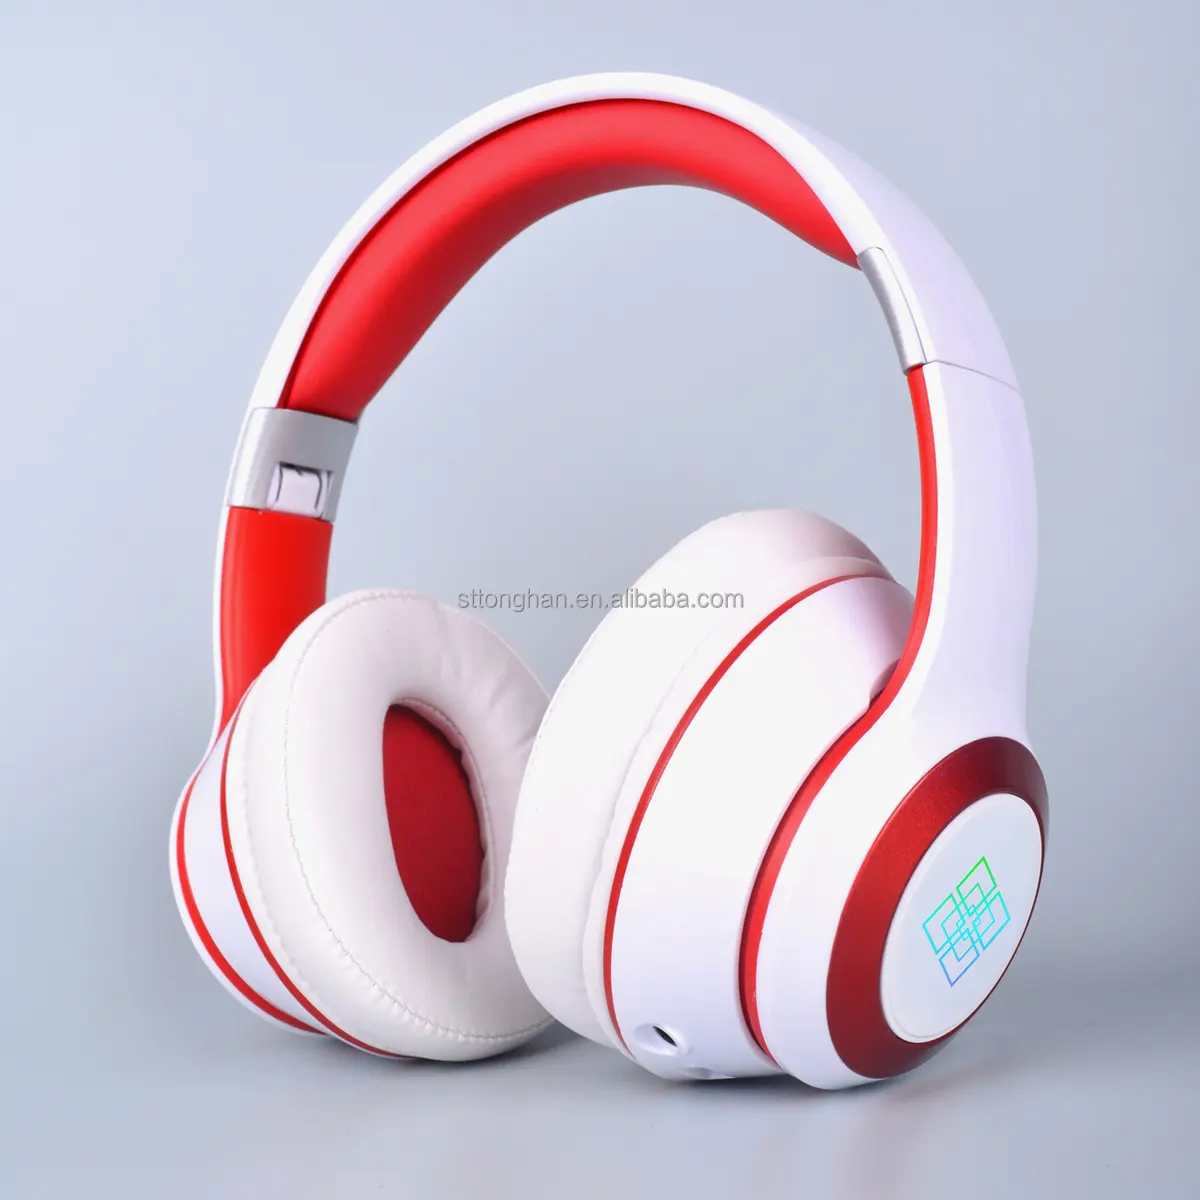 Super bass wireless ear headphones high quality over ear headphones gaming sport music